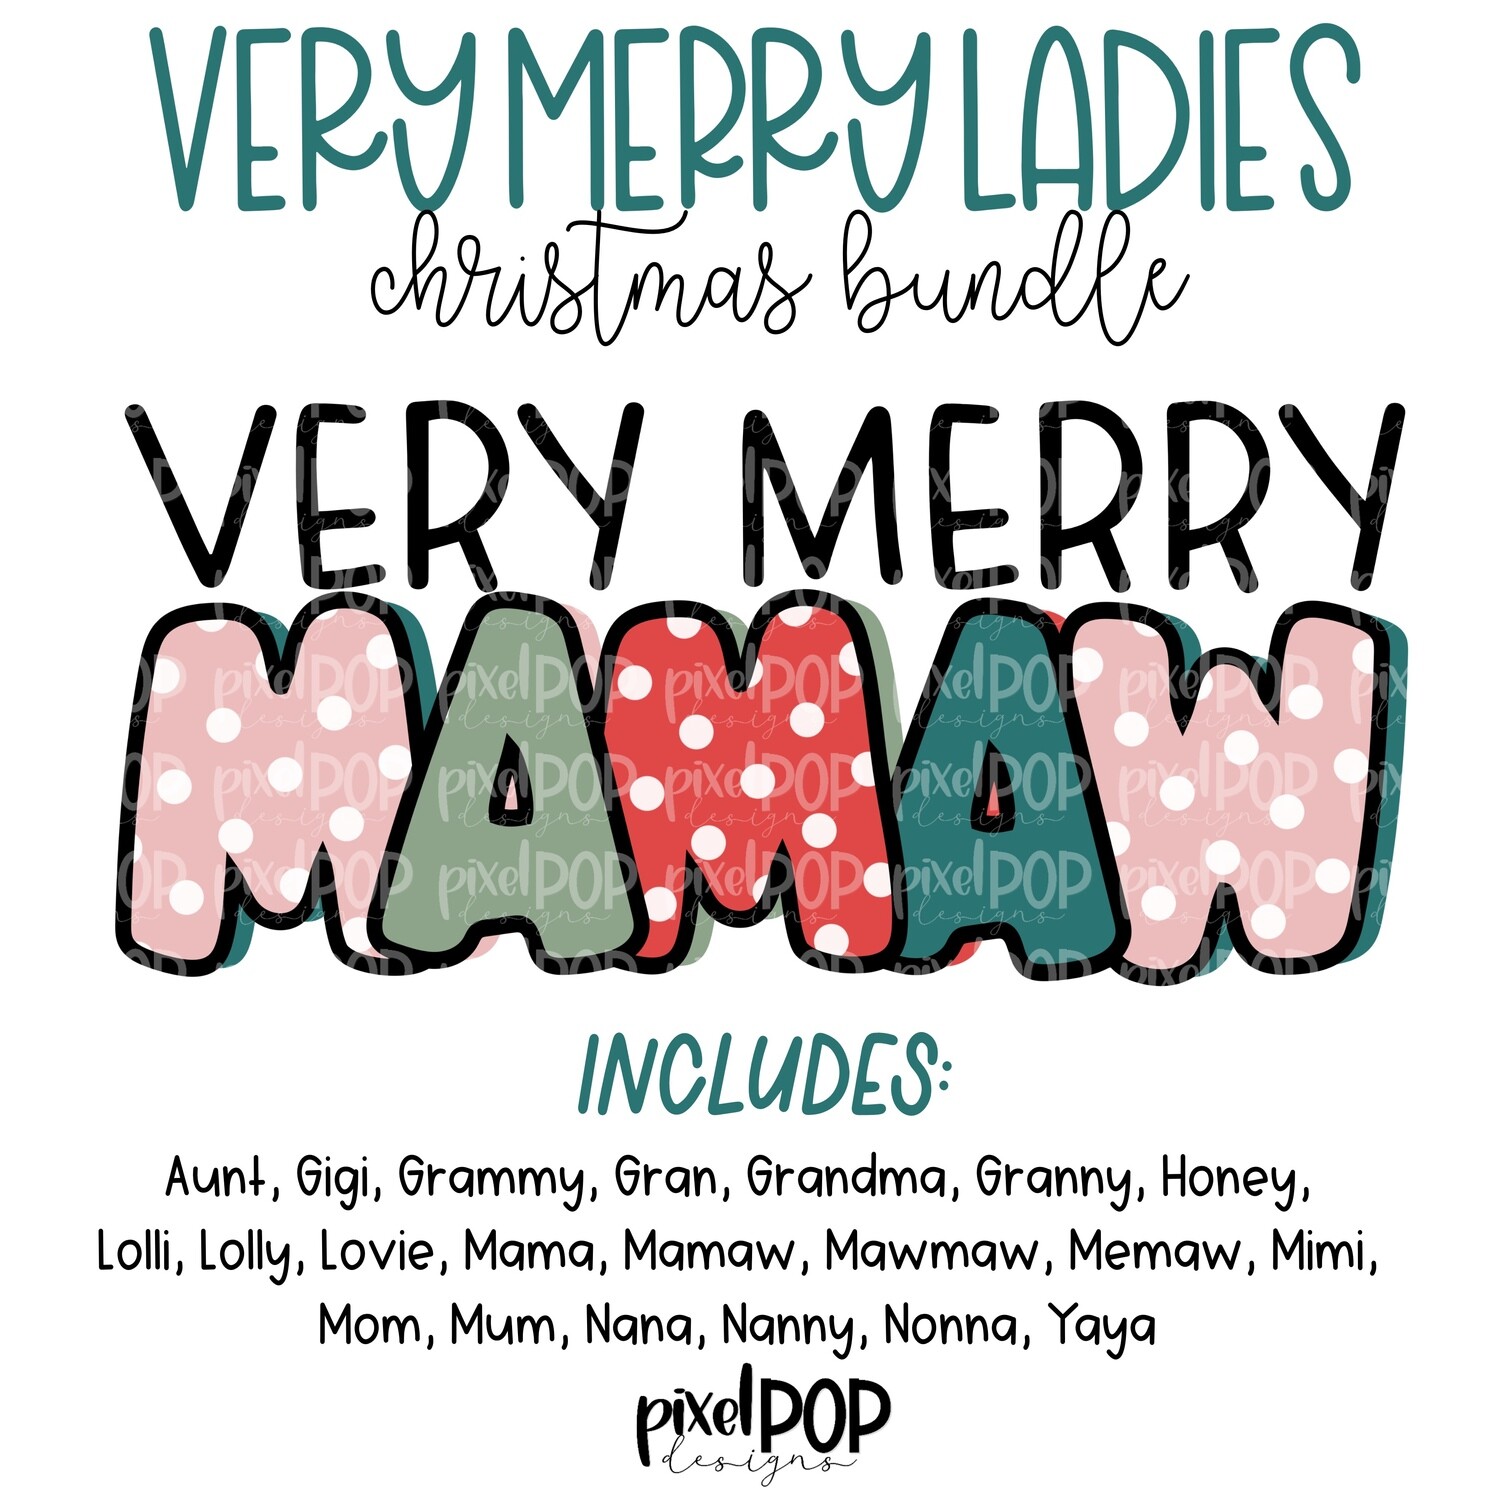 Very Merry Ladies Retro Colors Christmas Bundle - 21 Designs